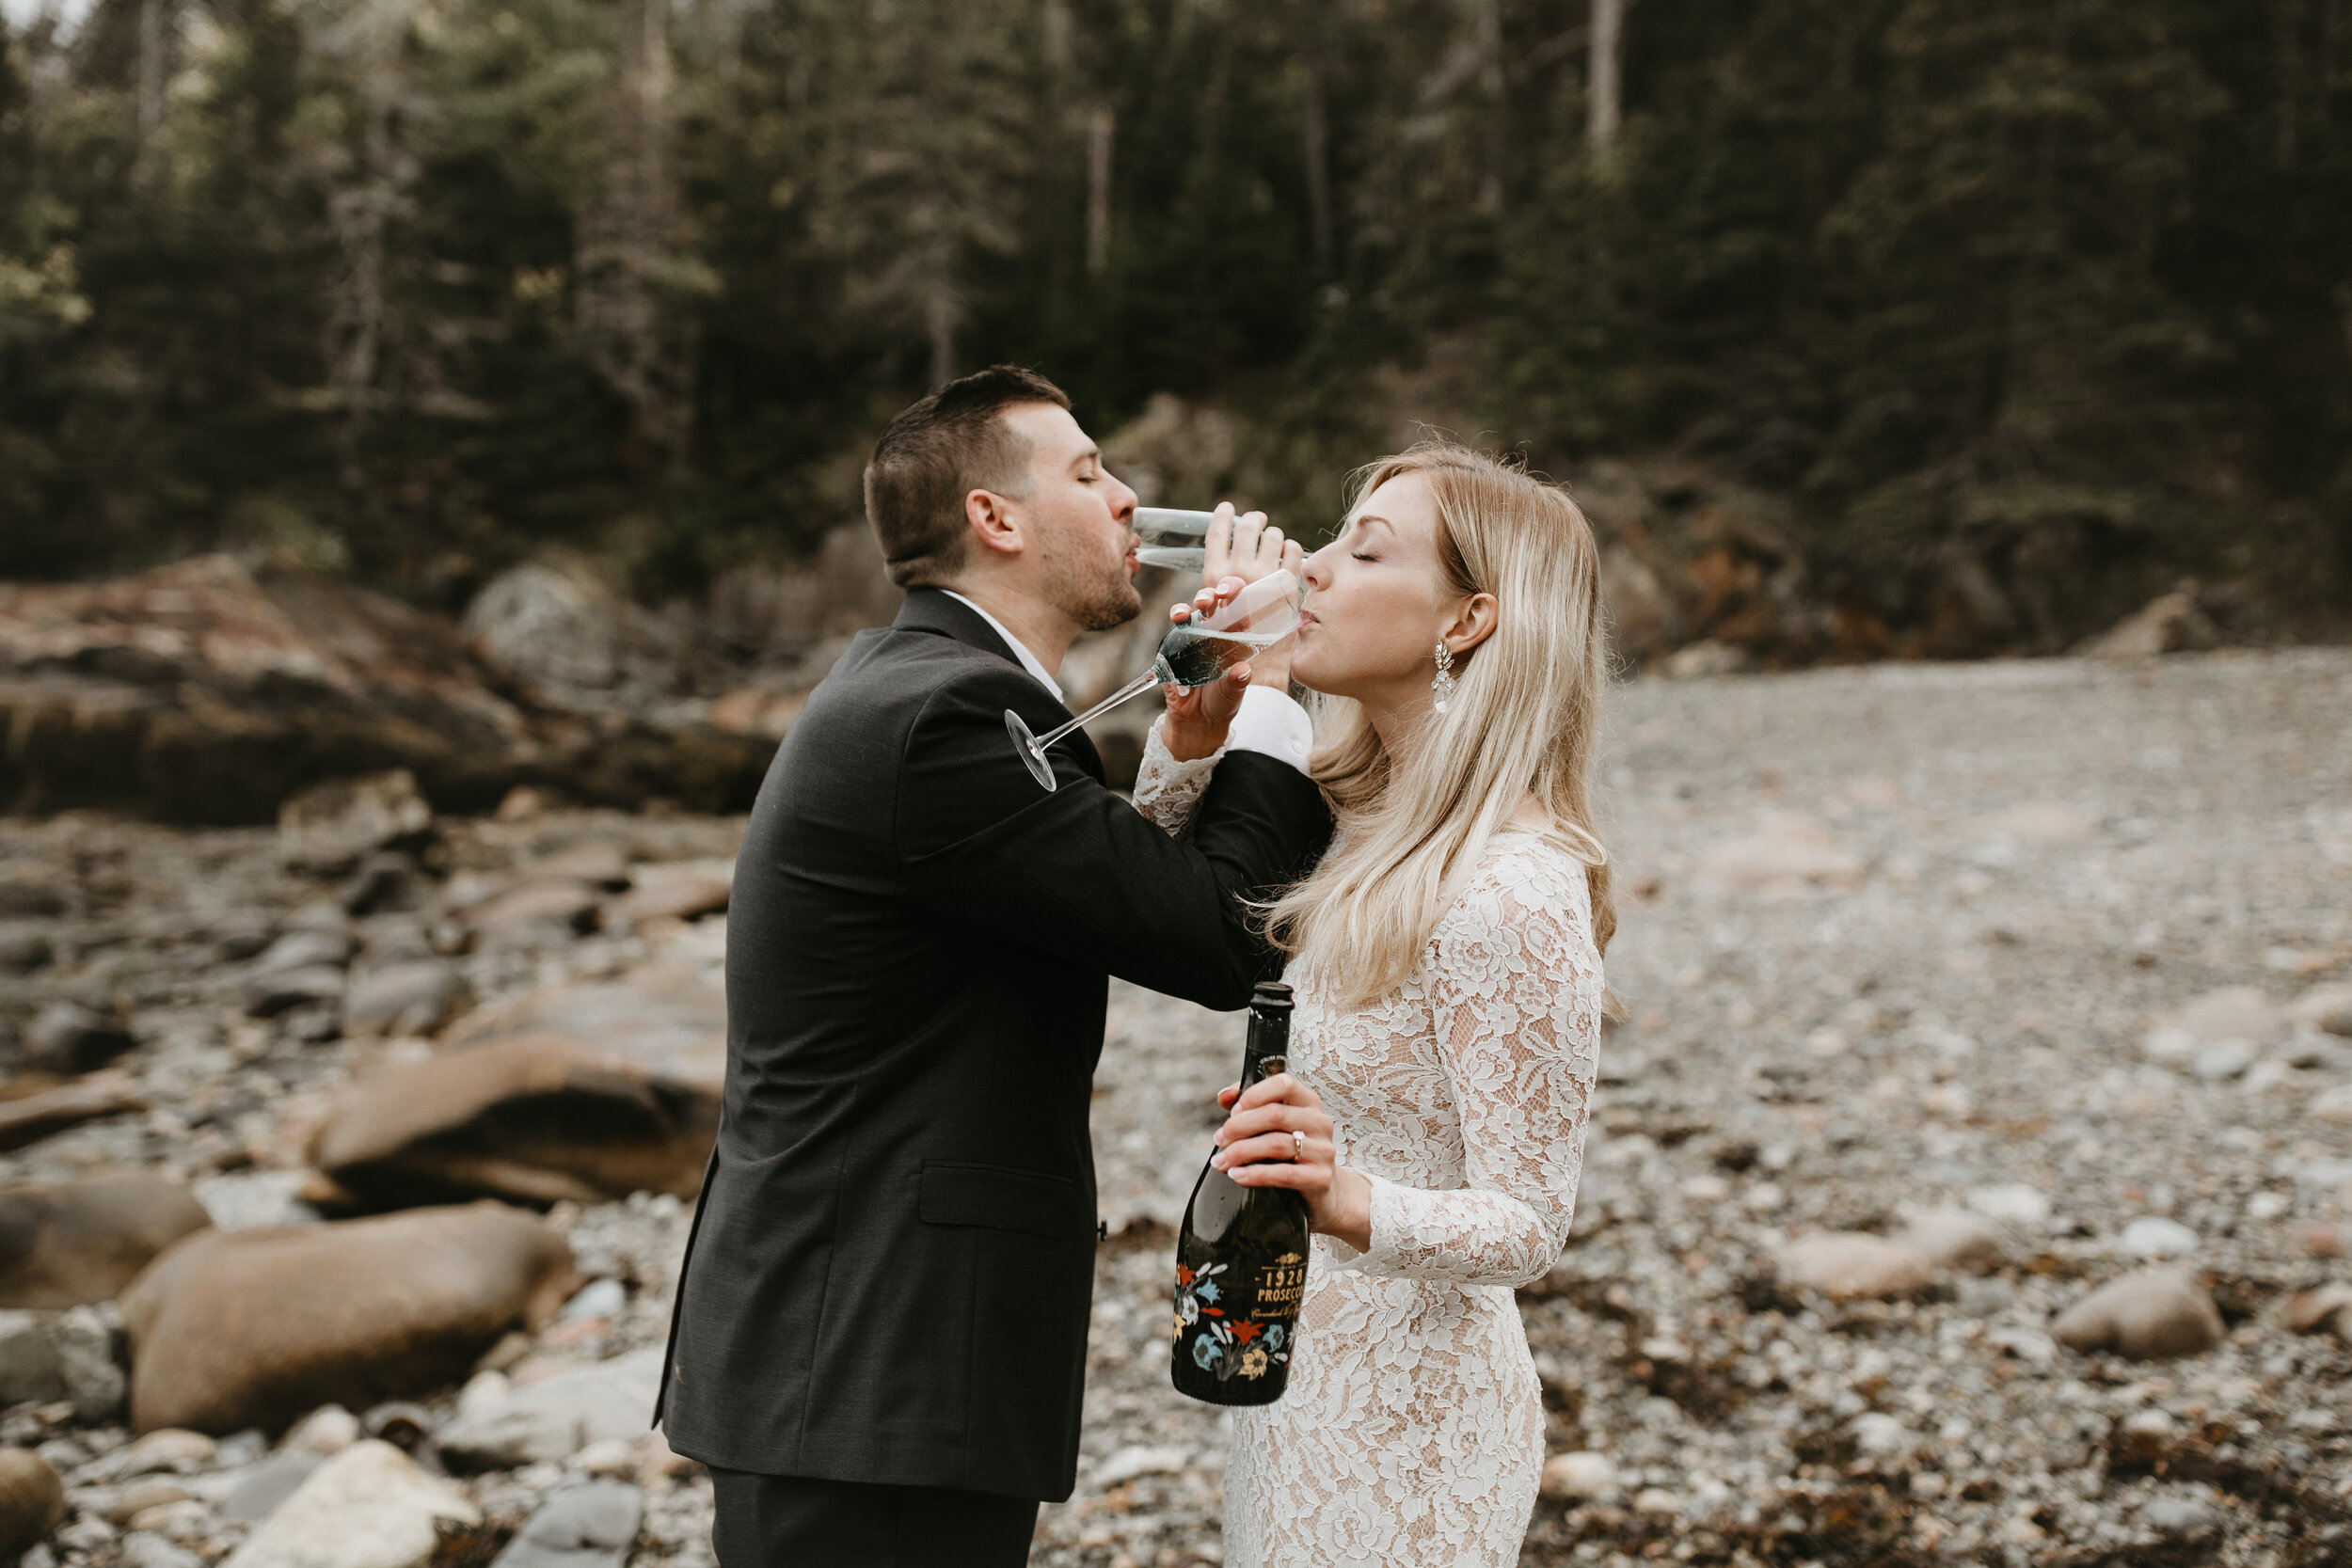 Nicole-Daacke-Photography-Acadia-national-park-elopement-photography-elopement-in-acadia-inspiration-maine-intimate-wedding-destination-elopement-photographer-rainy-day-maine-coast-bar-harbor-elopement-photography-187.jpg